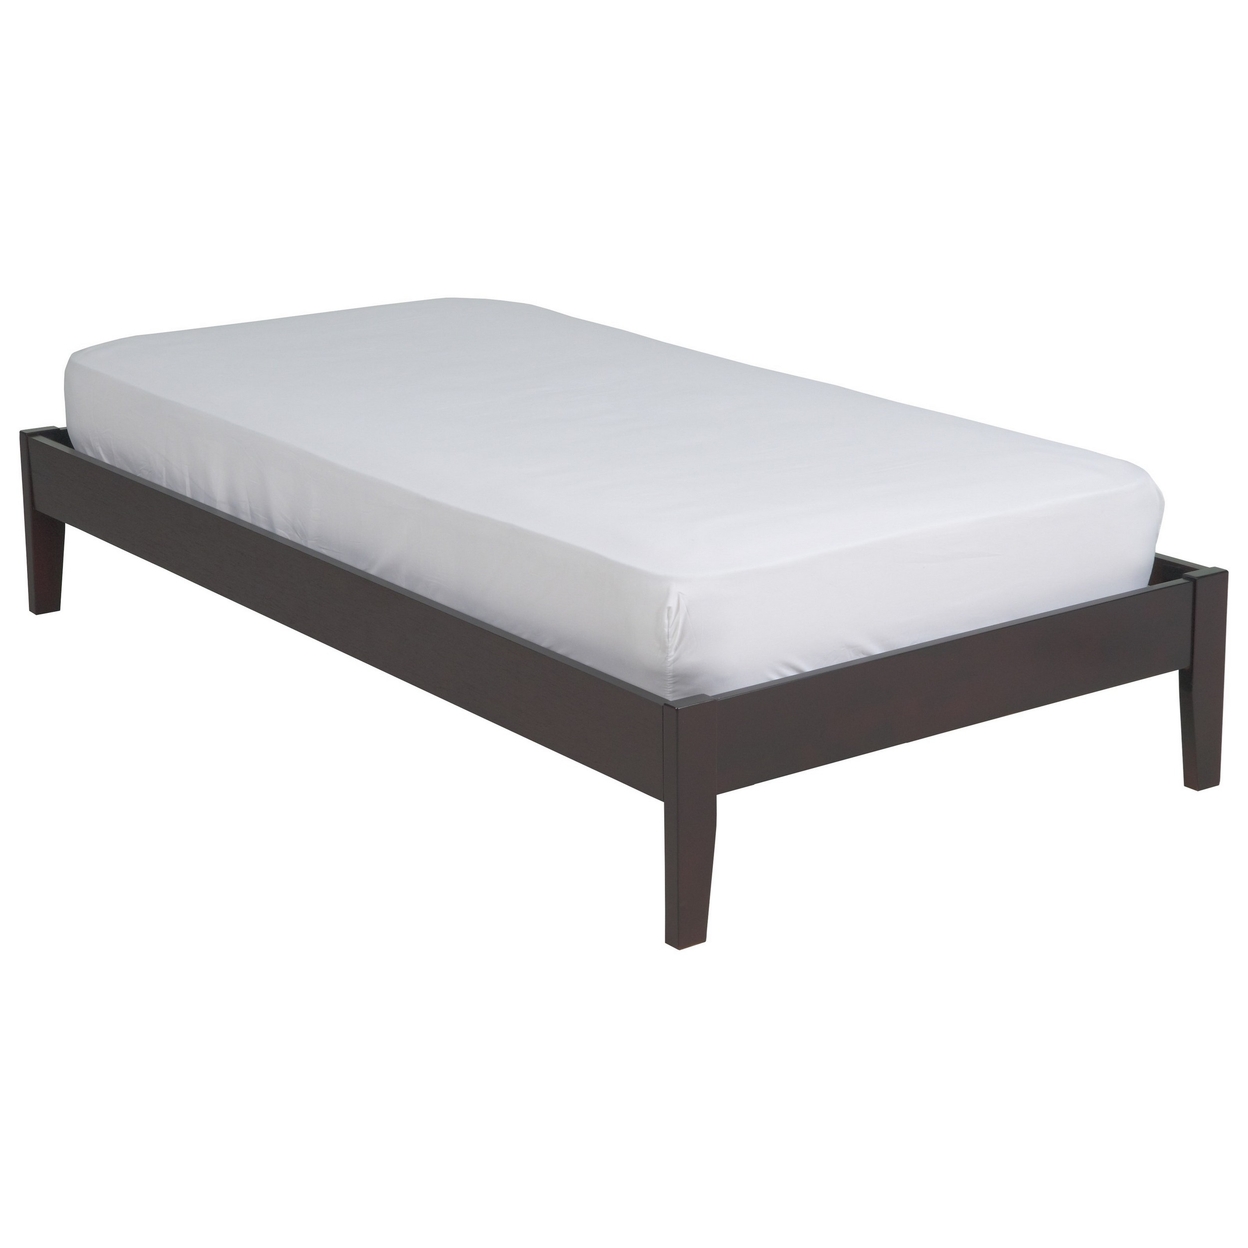 Evelyn Low Profile Queen Size Platform Bed, Slats, Rich Espresso Brown Wood- Saltoro Sherpi